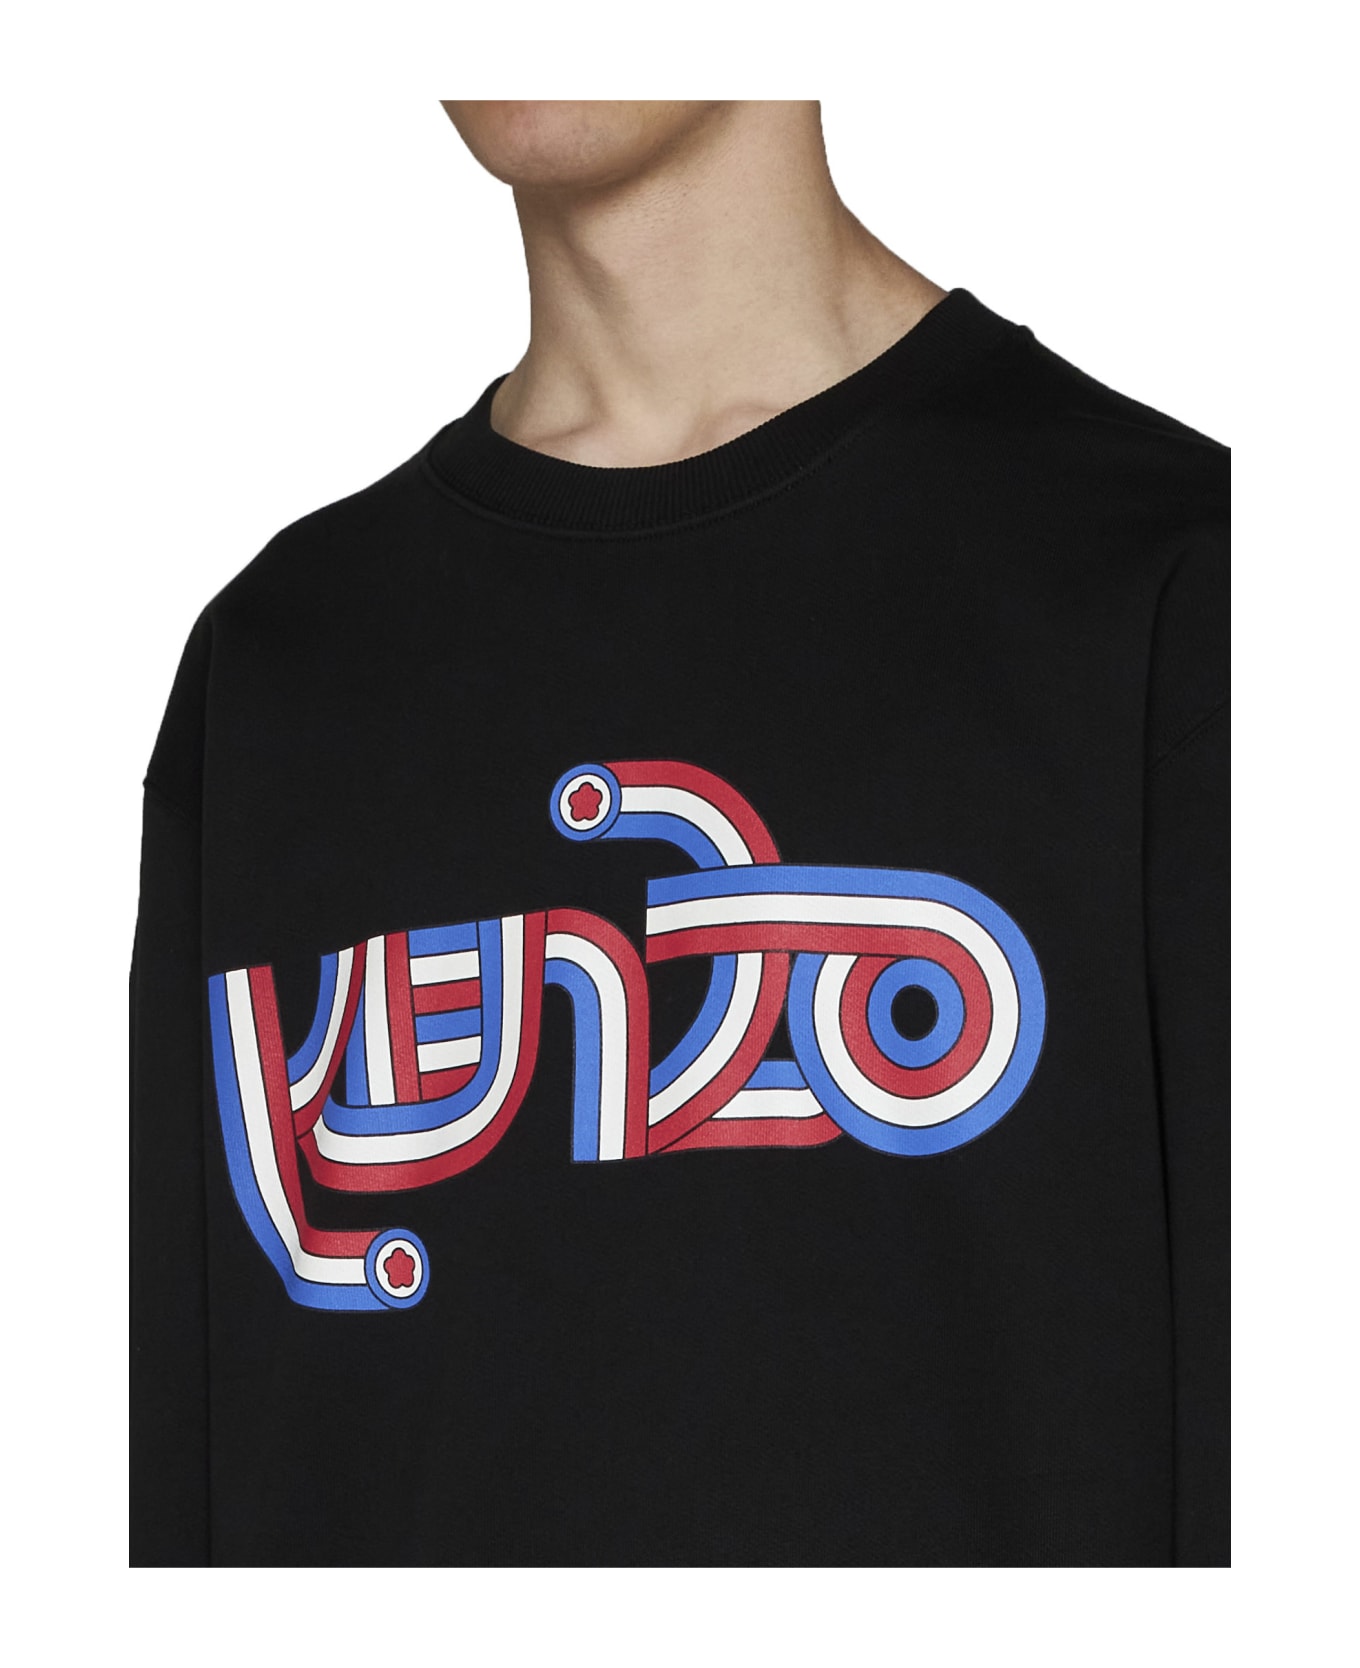 Kenzo Signature Sweater - Black